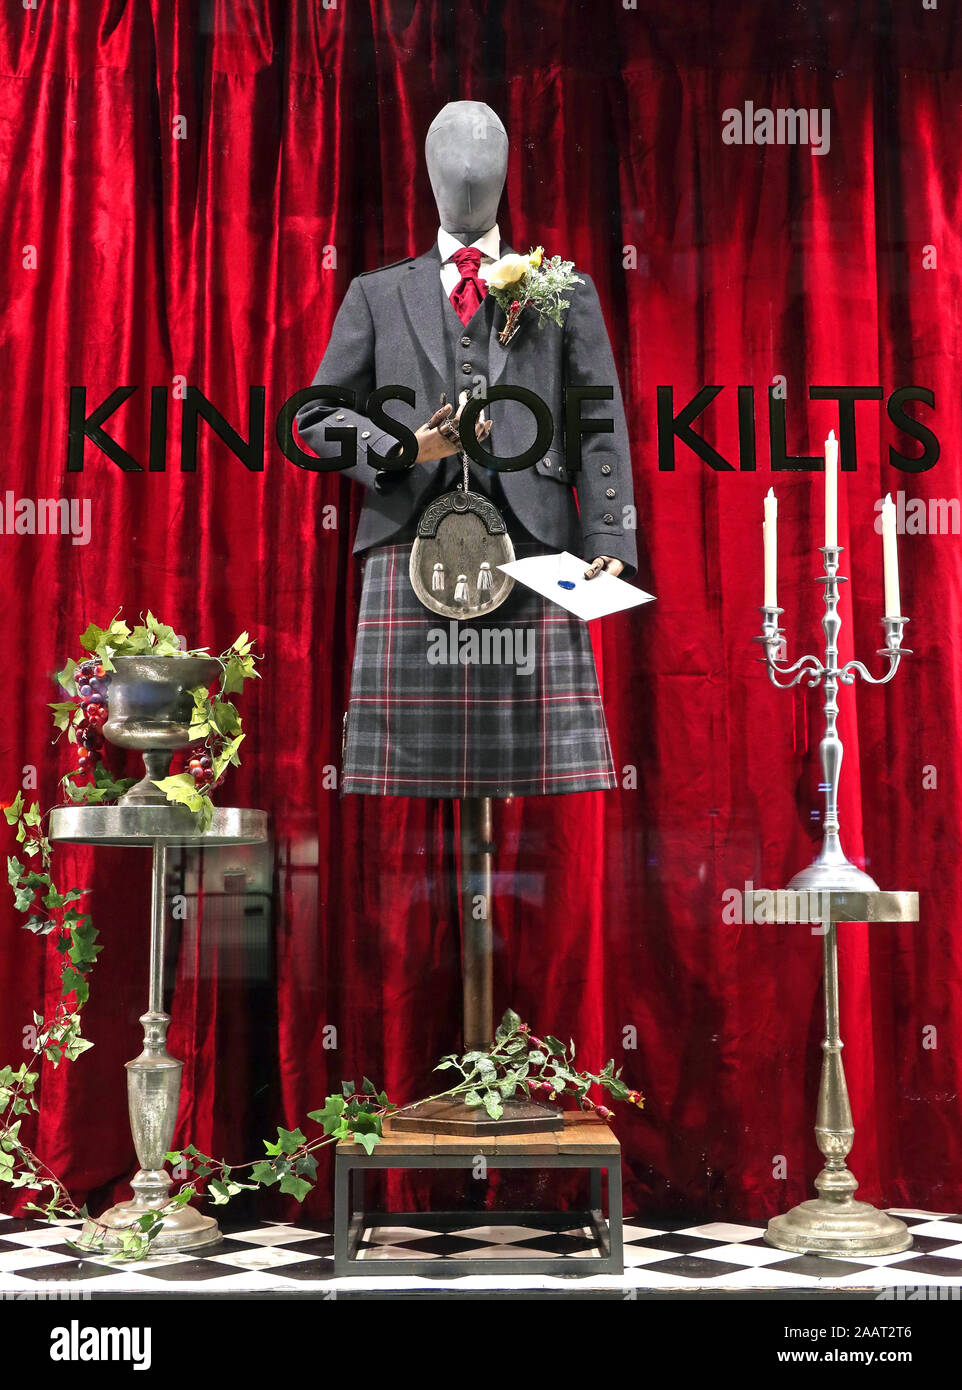 Kings of Kilts shop, 39 - 41 Bath Street, Glasgow, Scotland, UK G2 1HW, Kilt Store, MacGregor and MacDuff Stock Photo